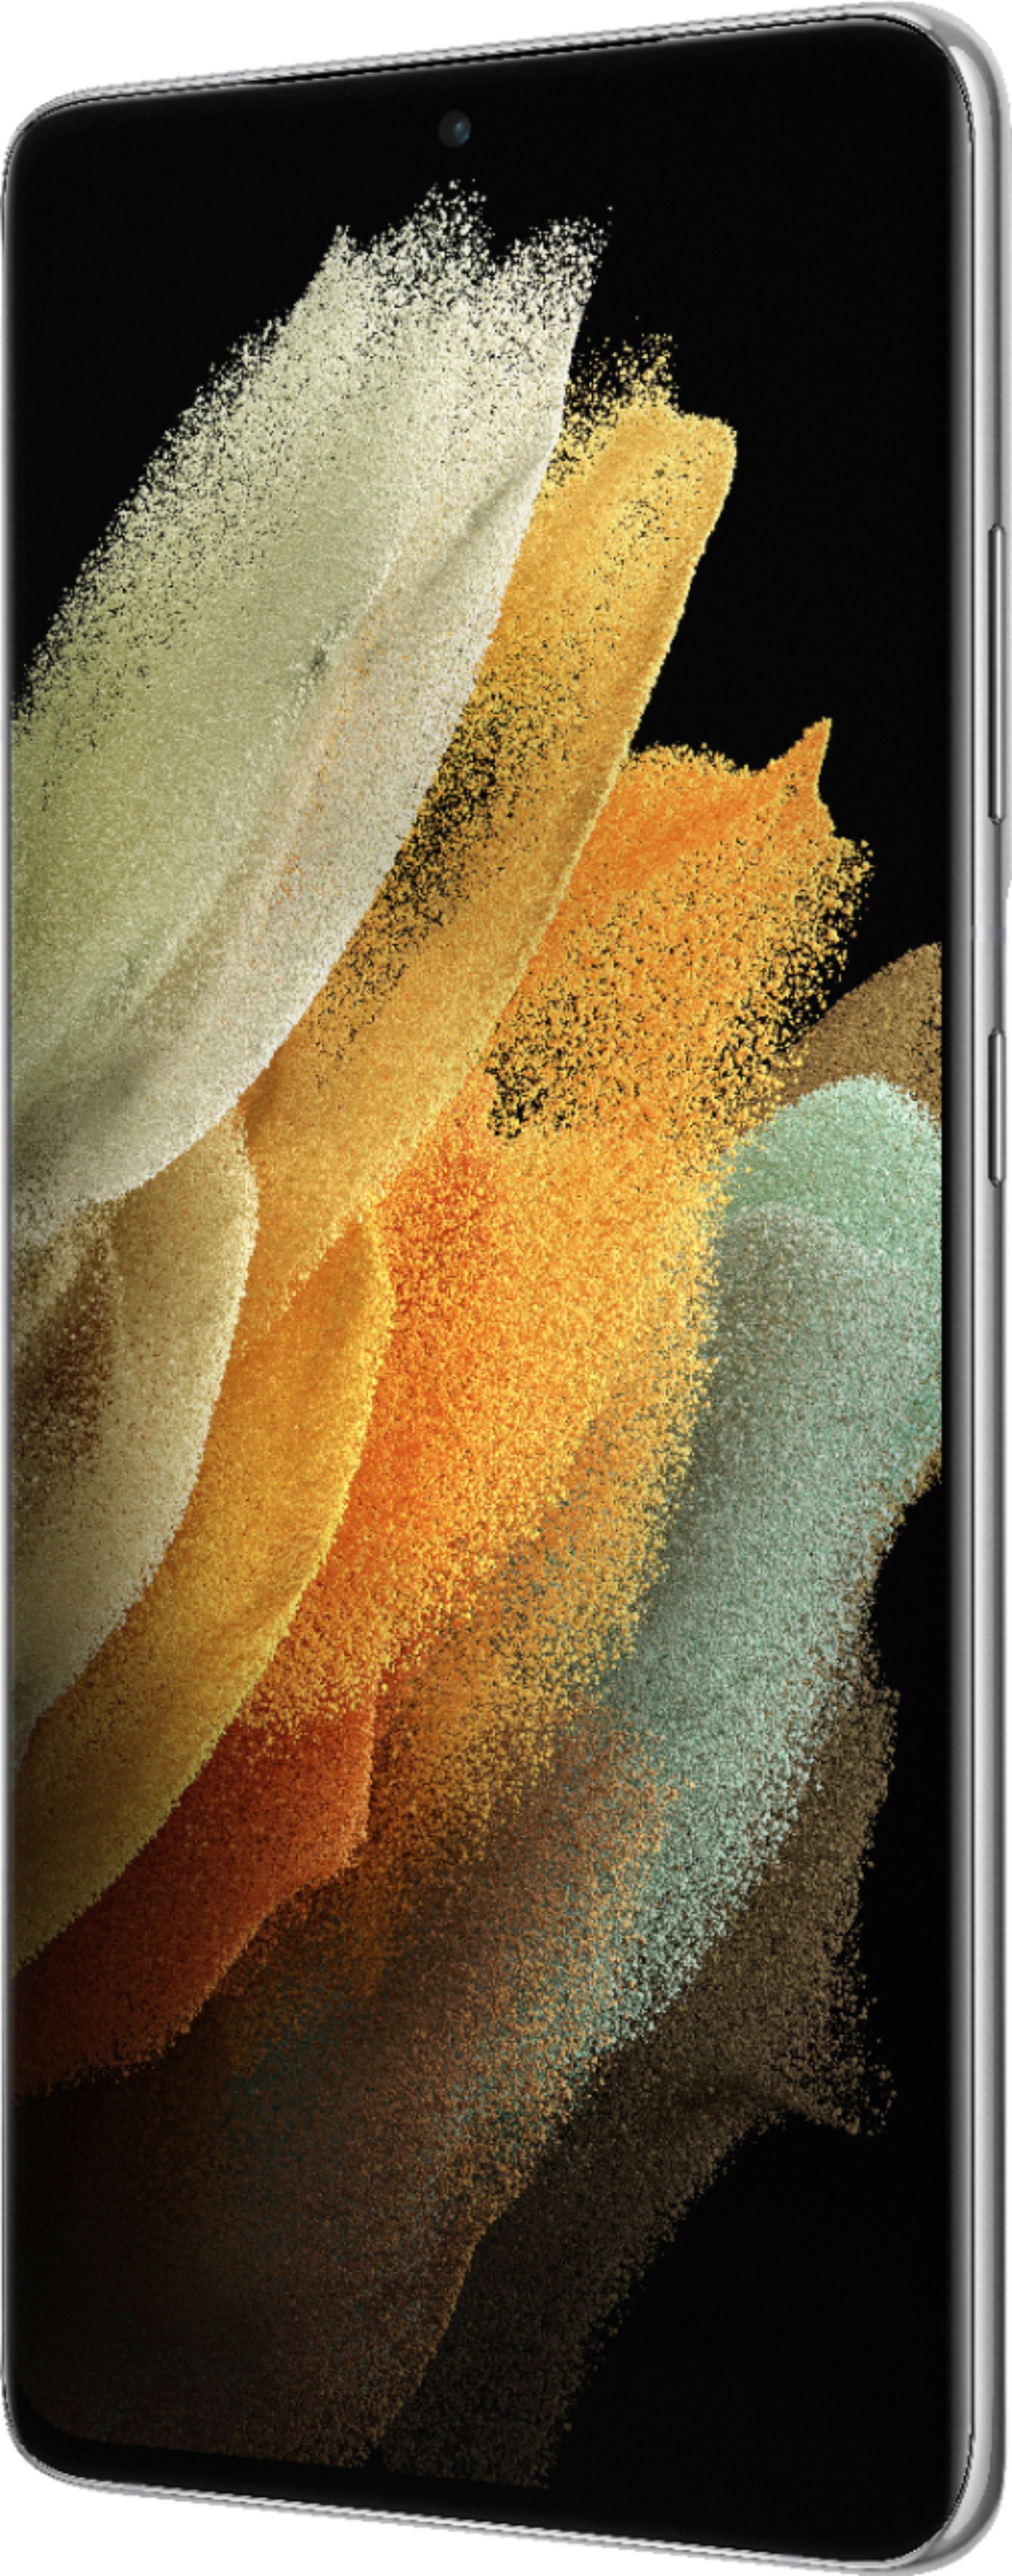 Samsung Galaxy S21+ 5G 128GB (Unlocked) Phantom Silver SM-G996UZSAXAA -  Best Buy